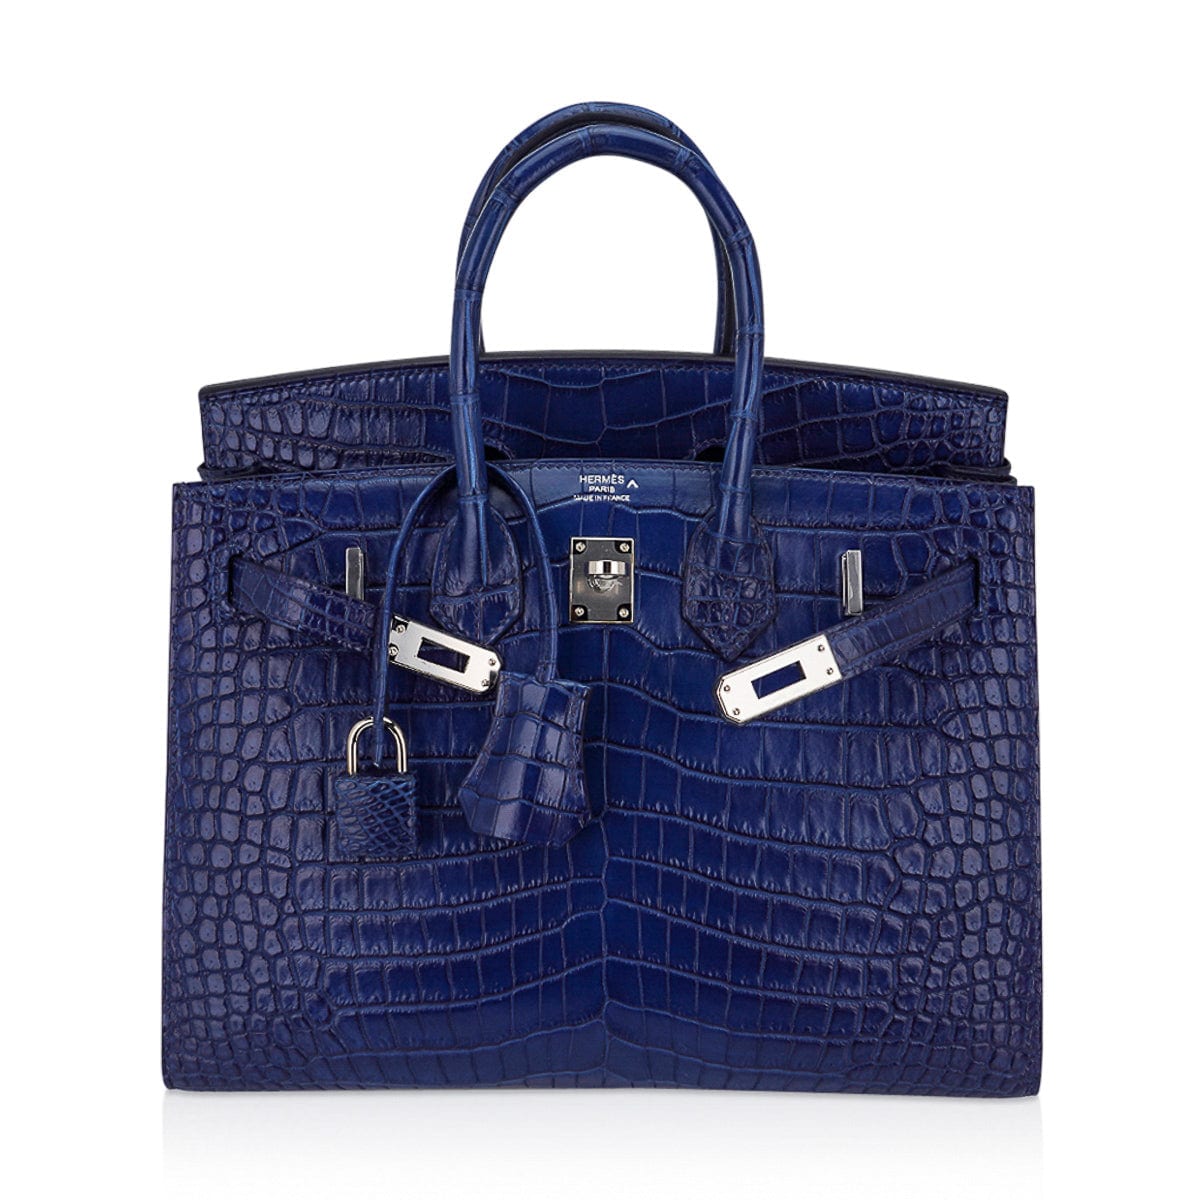 Hermes Women's Bag Model  Hermes bag birkin, Hermes birkin leather, Birken  bag